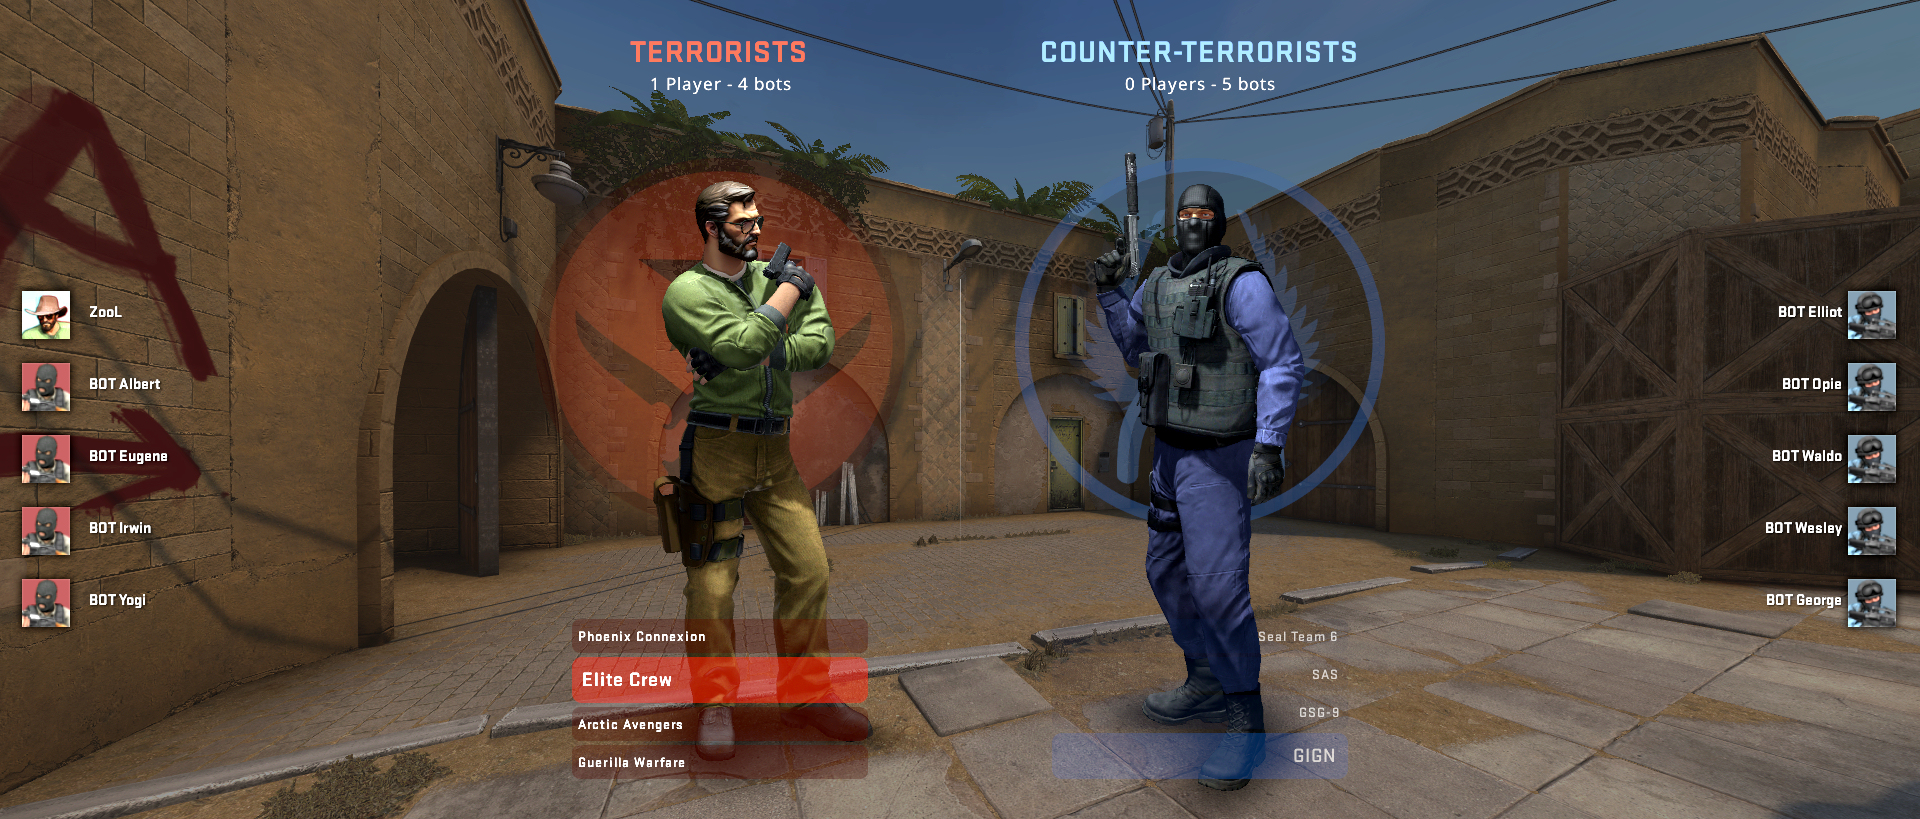 Counter-Strike: Global Offensive adds LFG